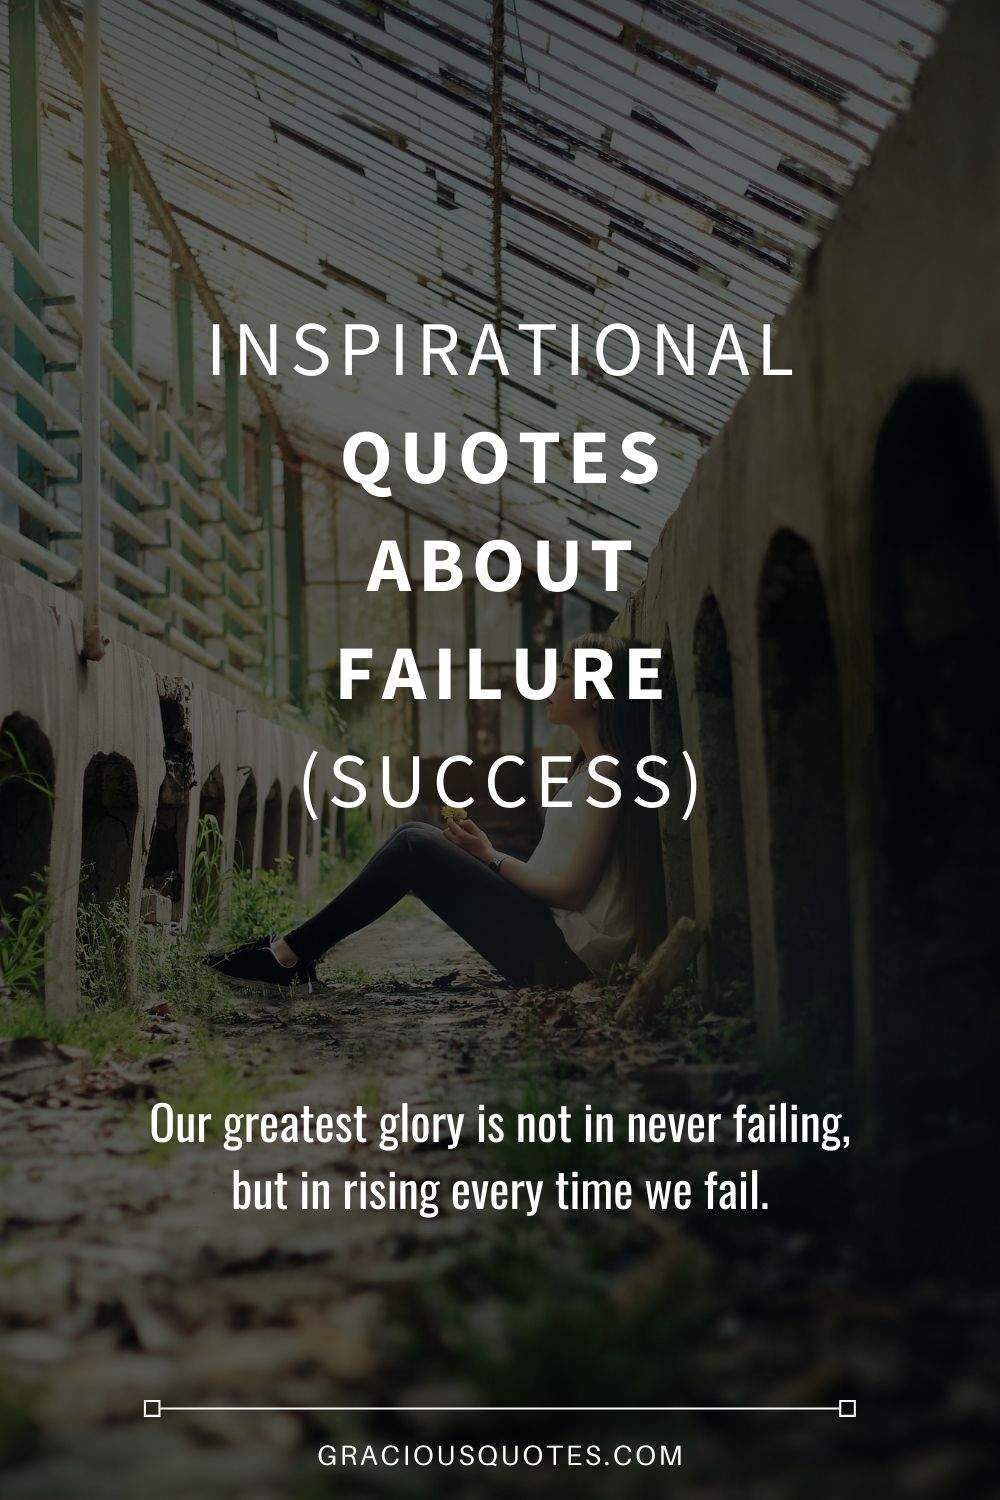 Inspirational Quotes About Failure (SUCCESS) - Gracious Quotes